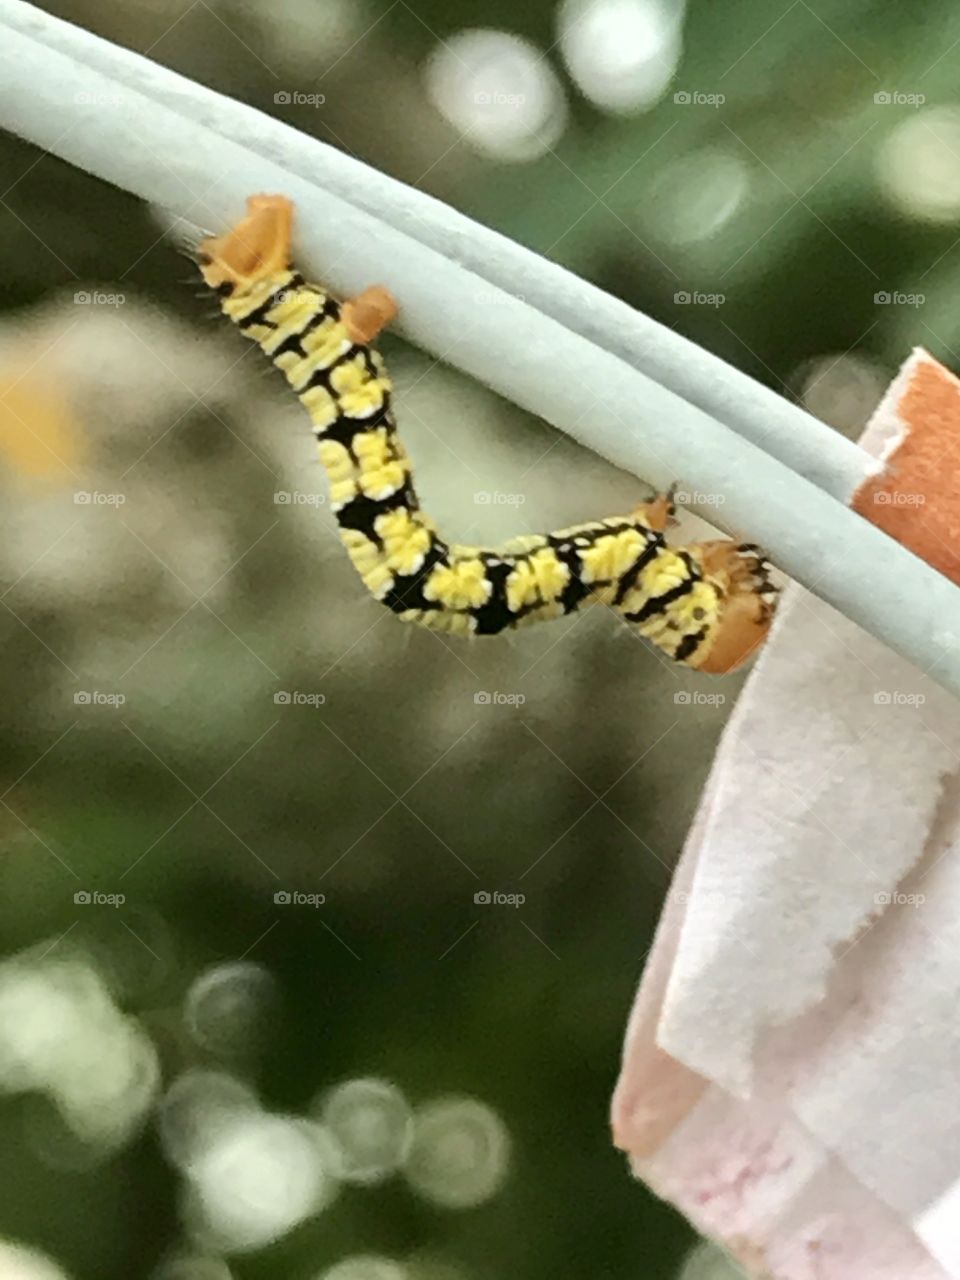 Caterpillar on wire